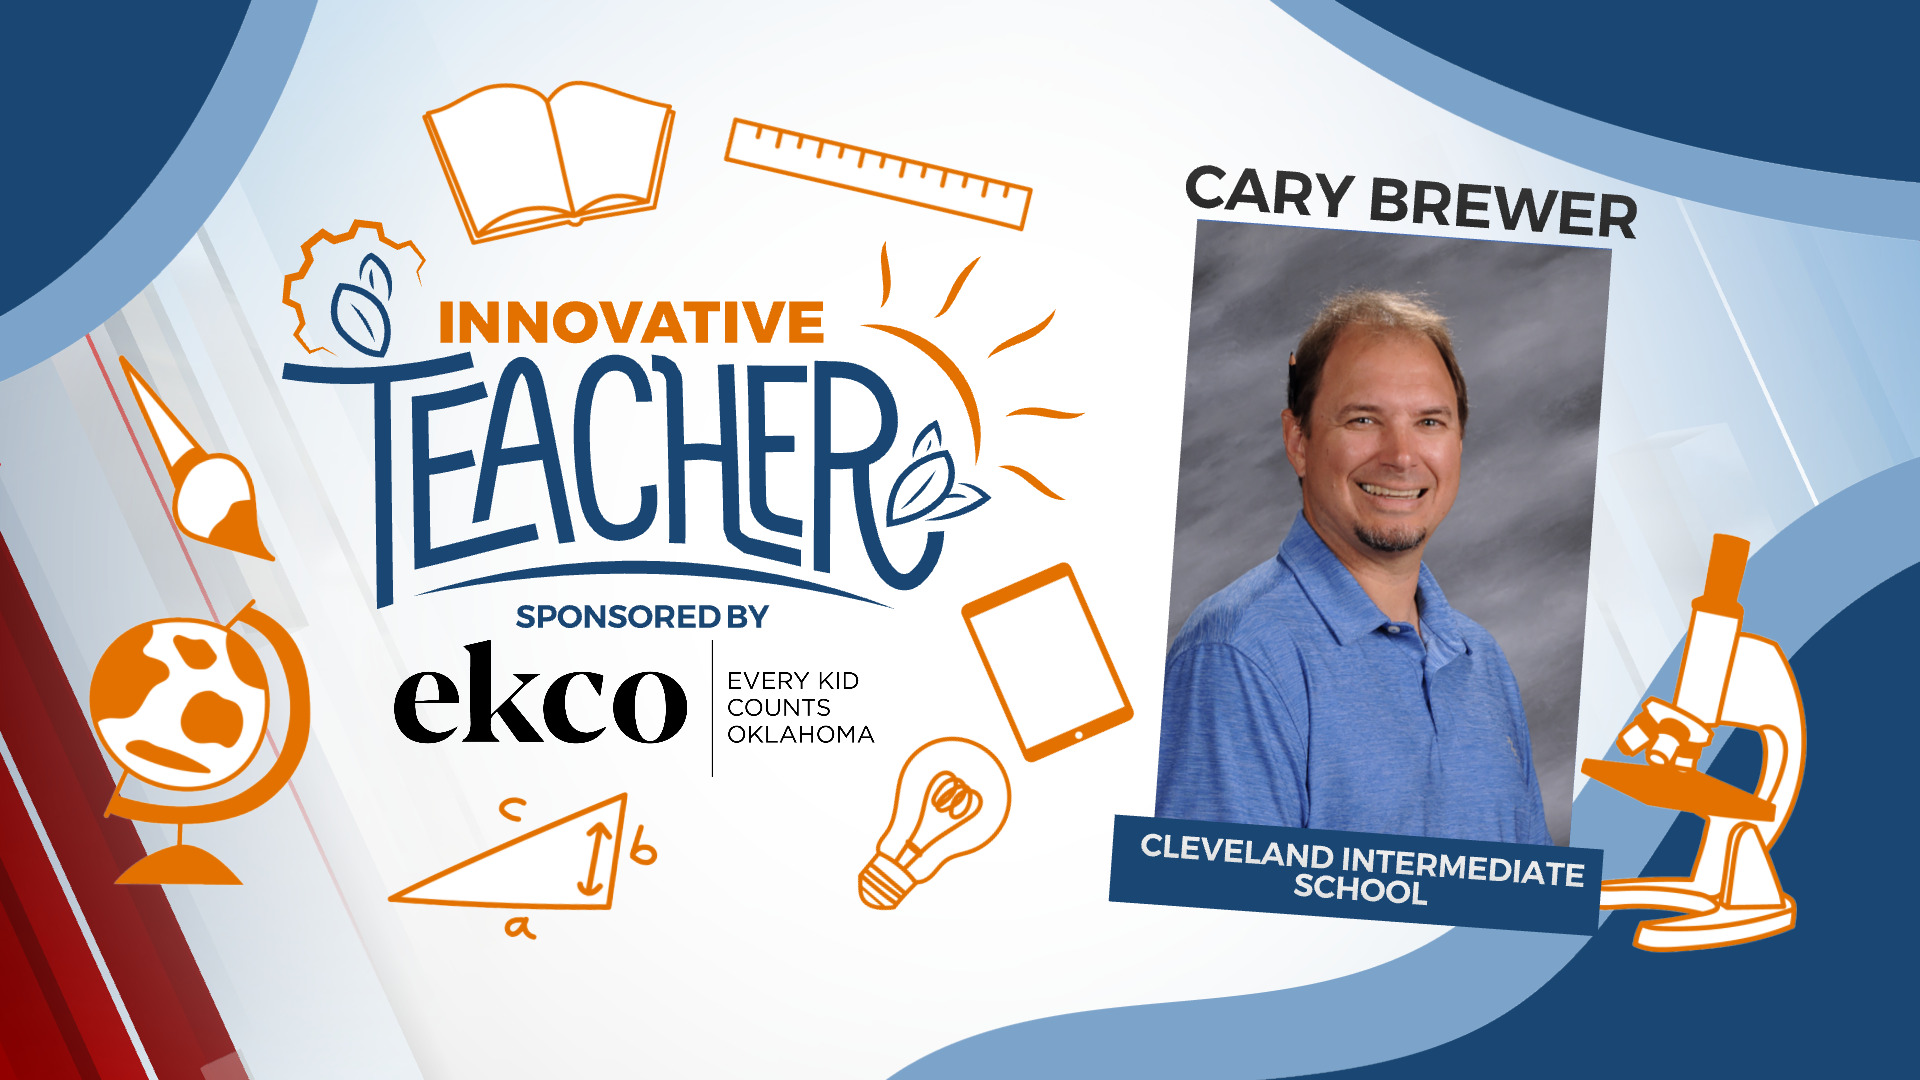 Innovative Teacher: Cary Brewer Of Cleveland Intermediate School